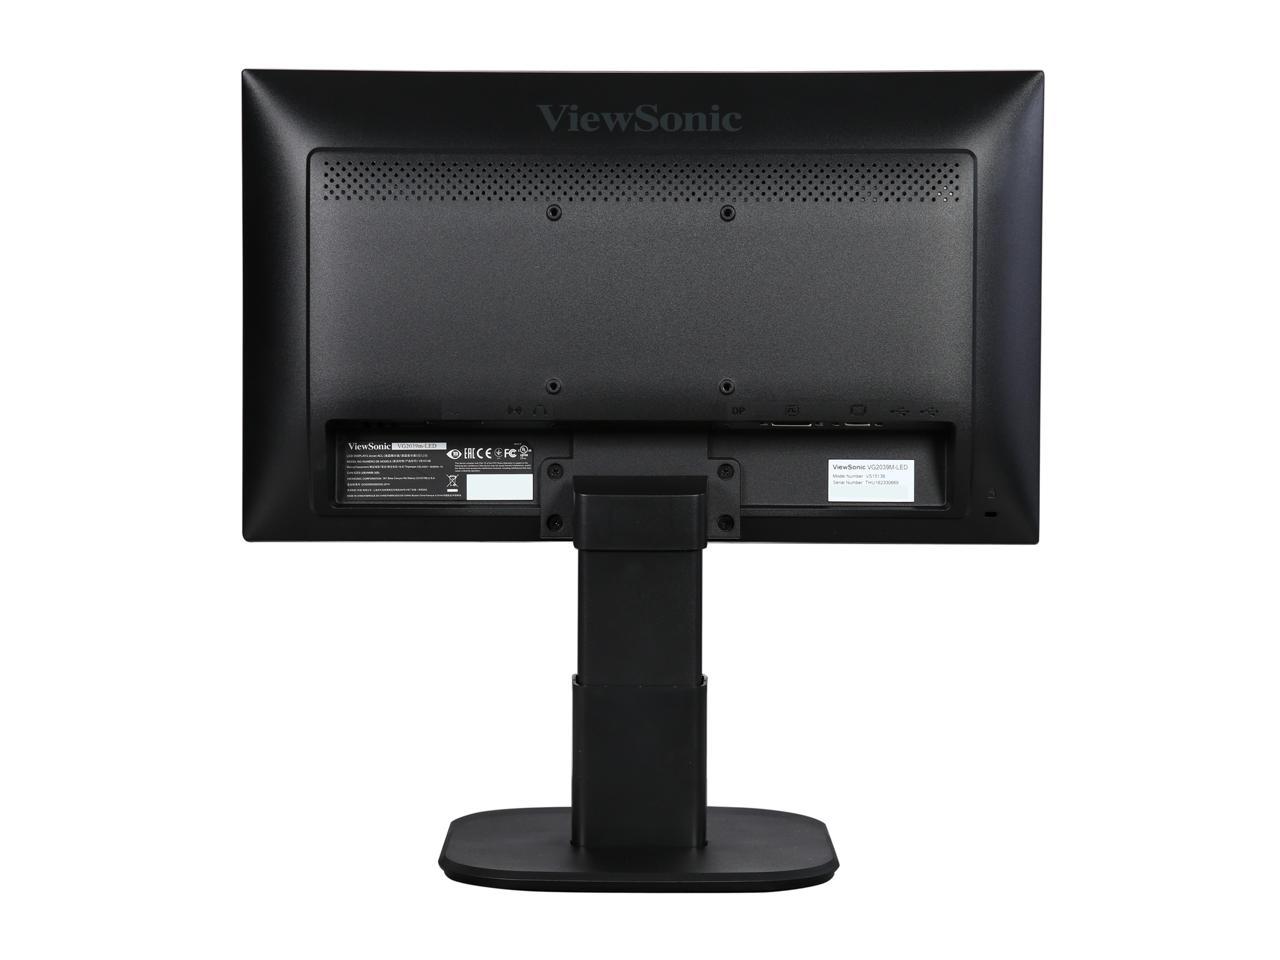 ViewSonic VG2039m-LED 20" 1600 x 900 TN Monitor, 1000:1, 250cd/m2, USB&VGA&DVI-D Display Port, Built-in Speaker